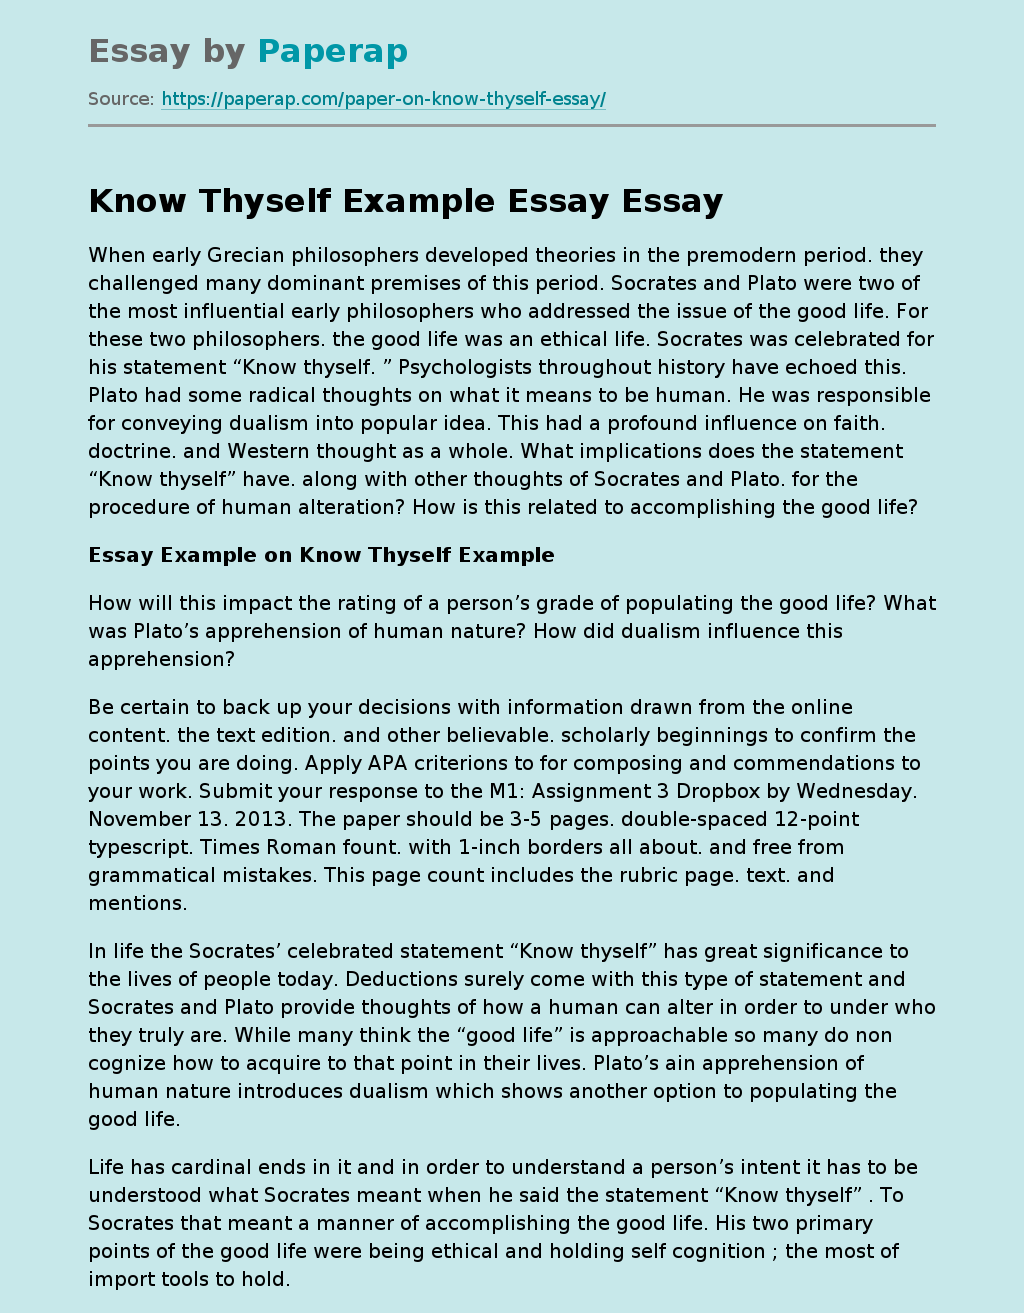 Know Thyself Example Essay